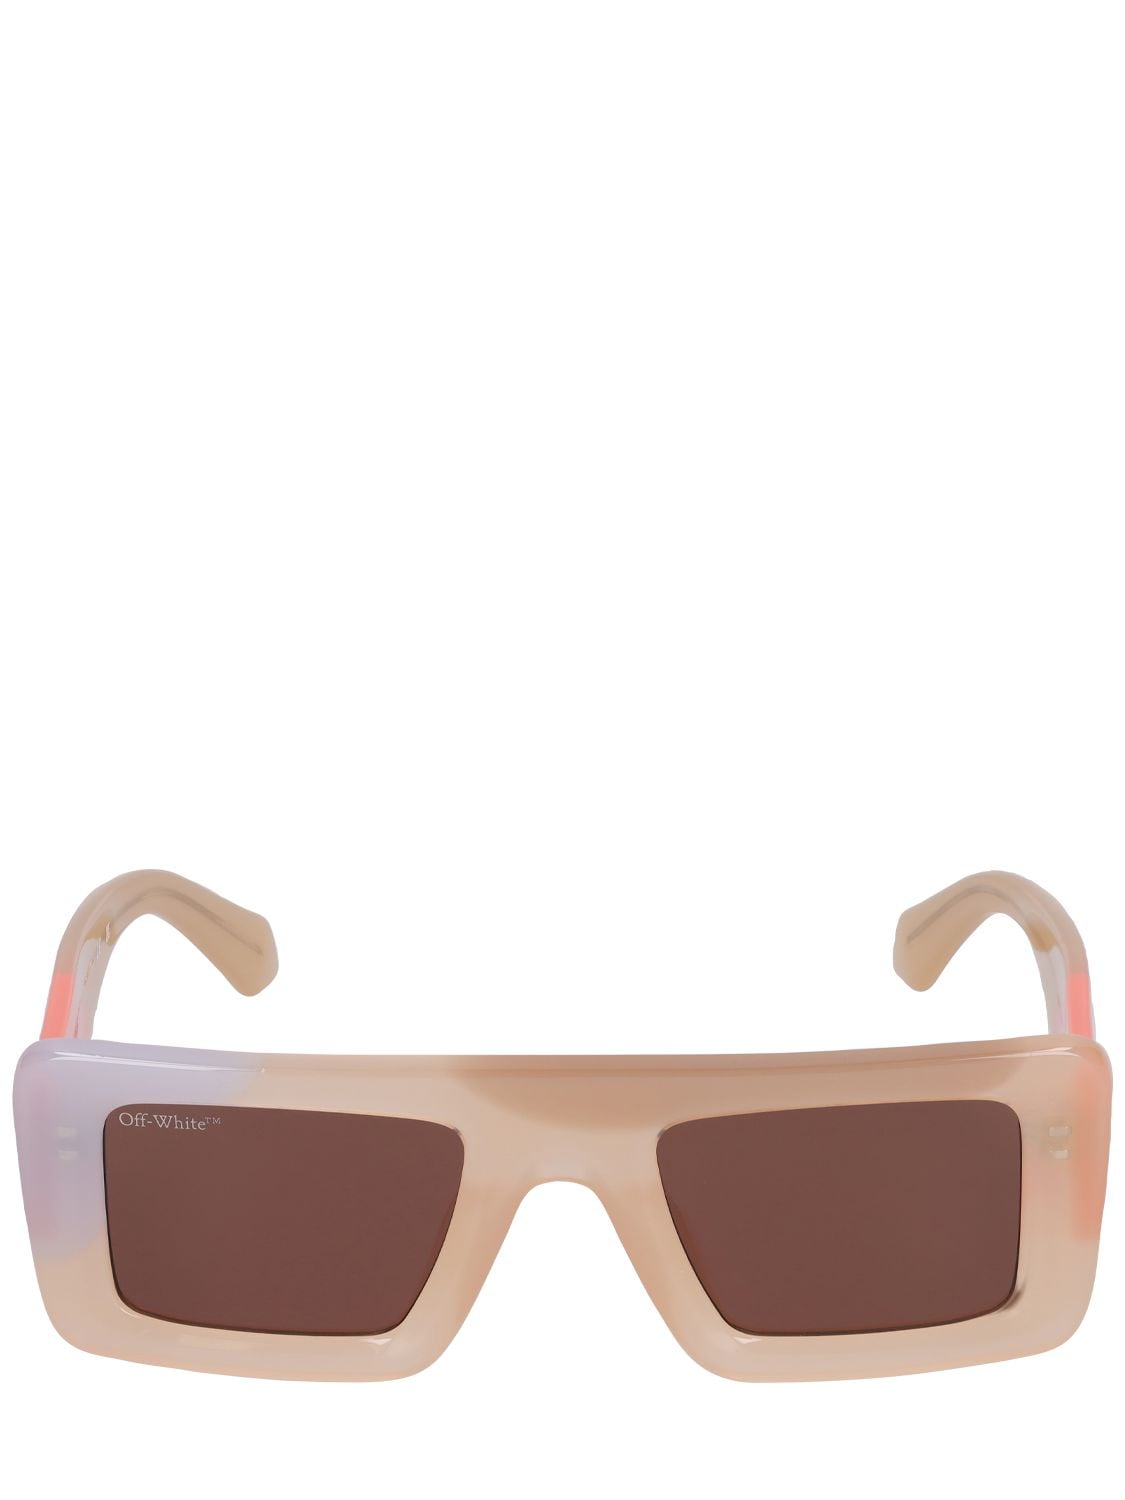 Off-white Seattle Squared Acetate Sunglasses In Neutrals